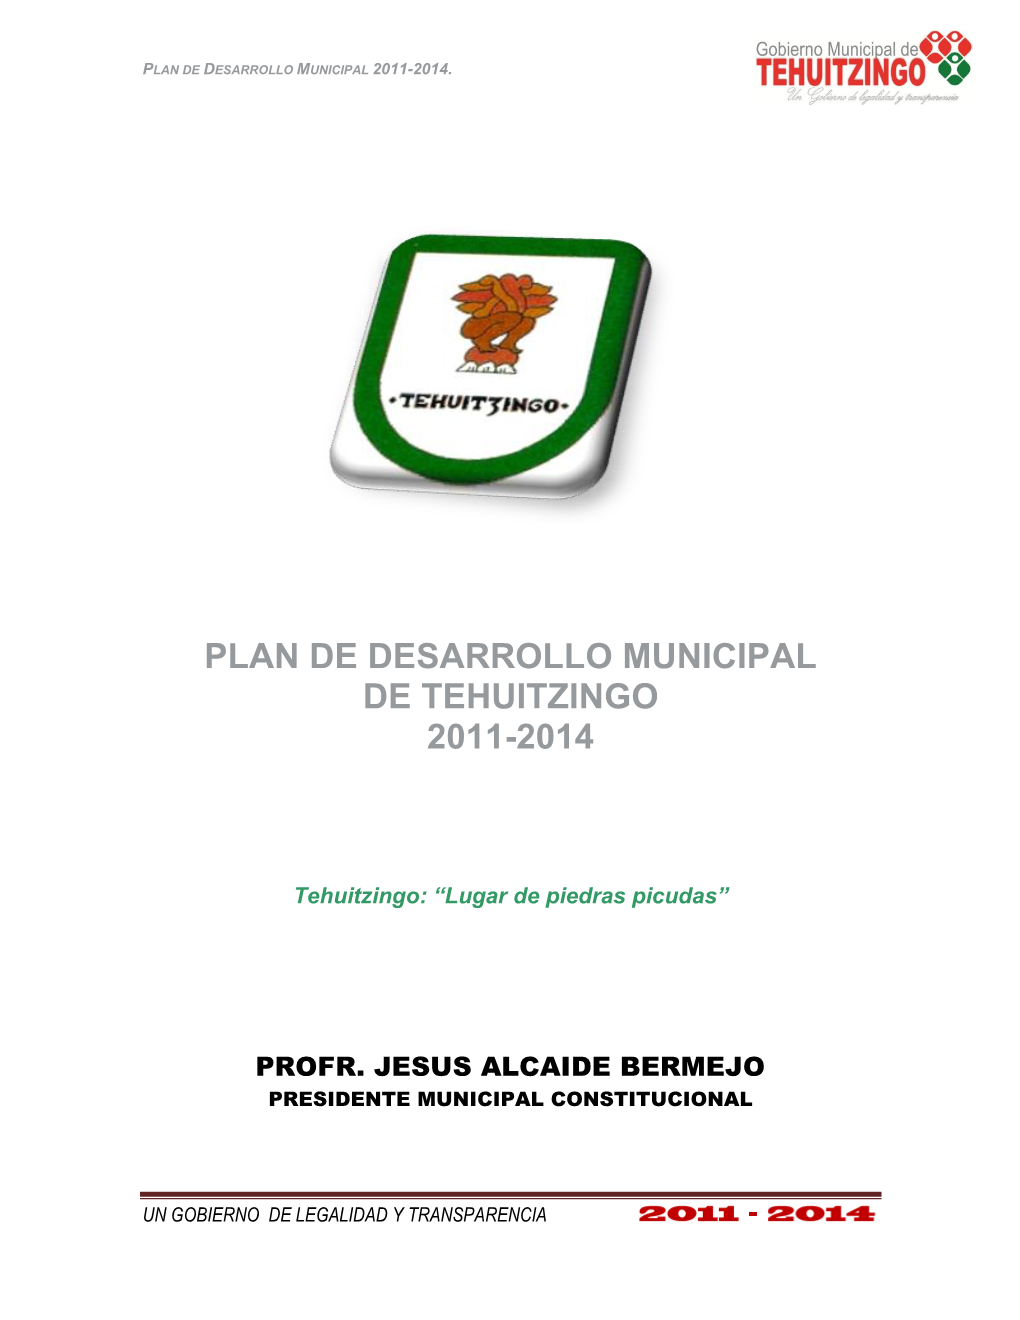 Plan De Desarrollo Municipal De Tehuitzingo 2011-2014